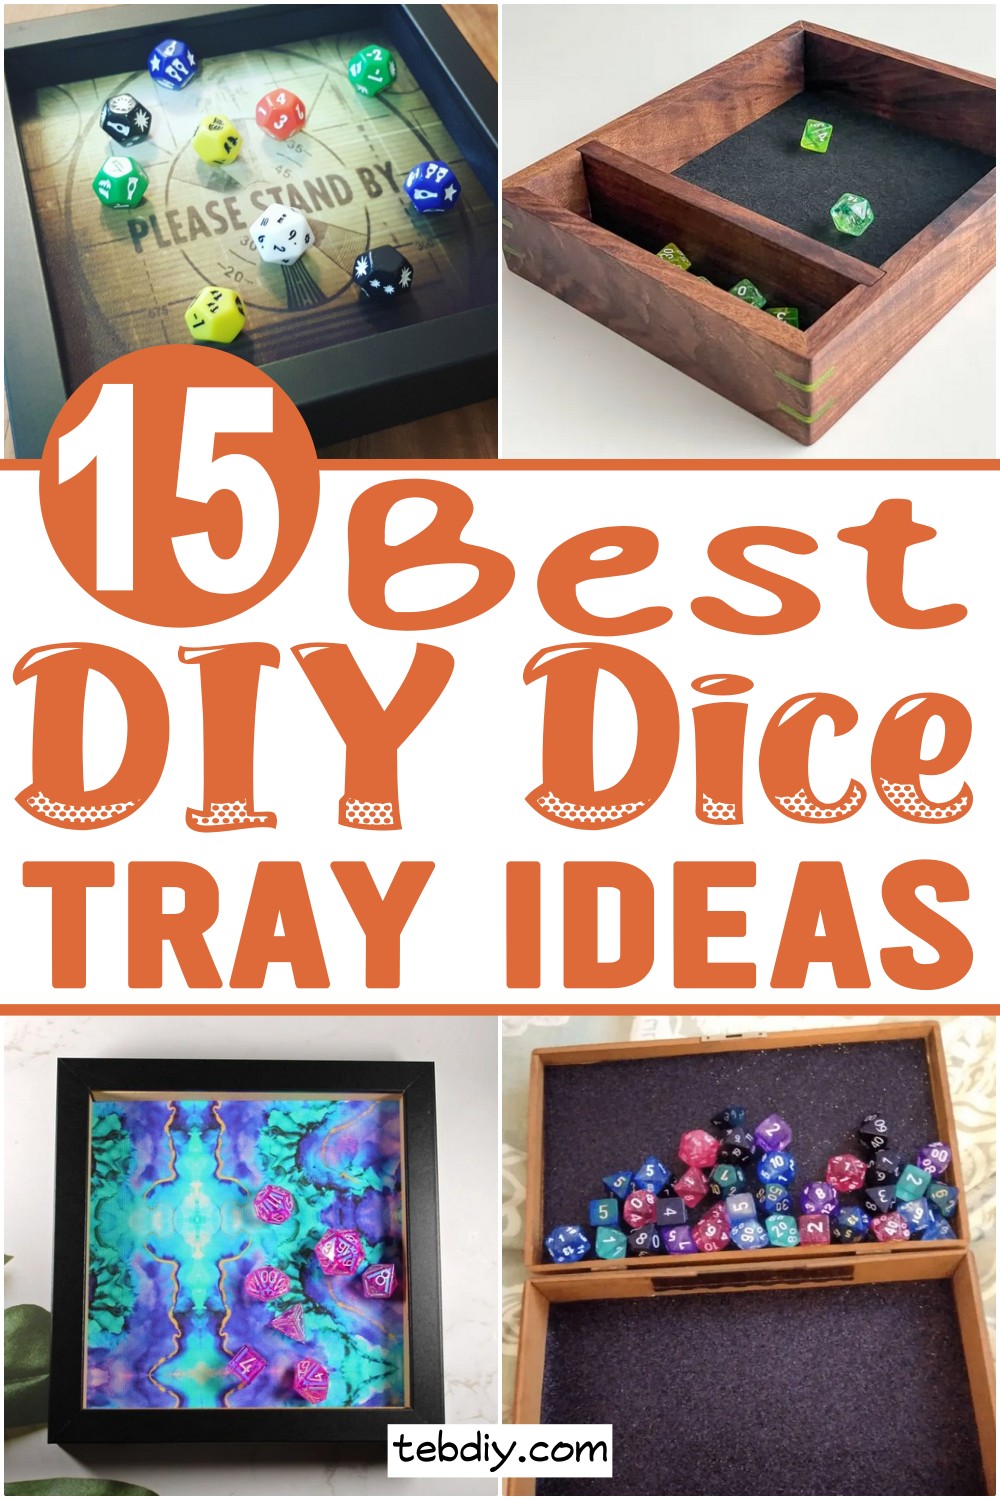 15 Best DIY Dice Tray Ideas